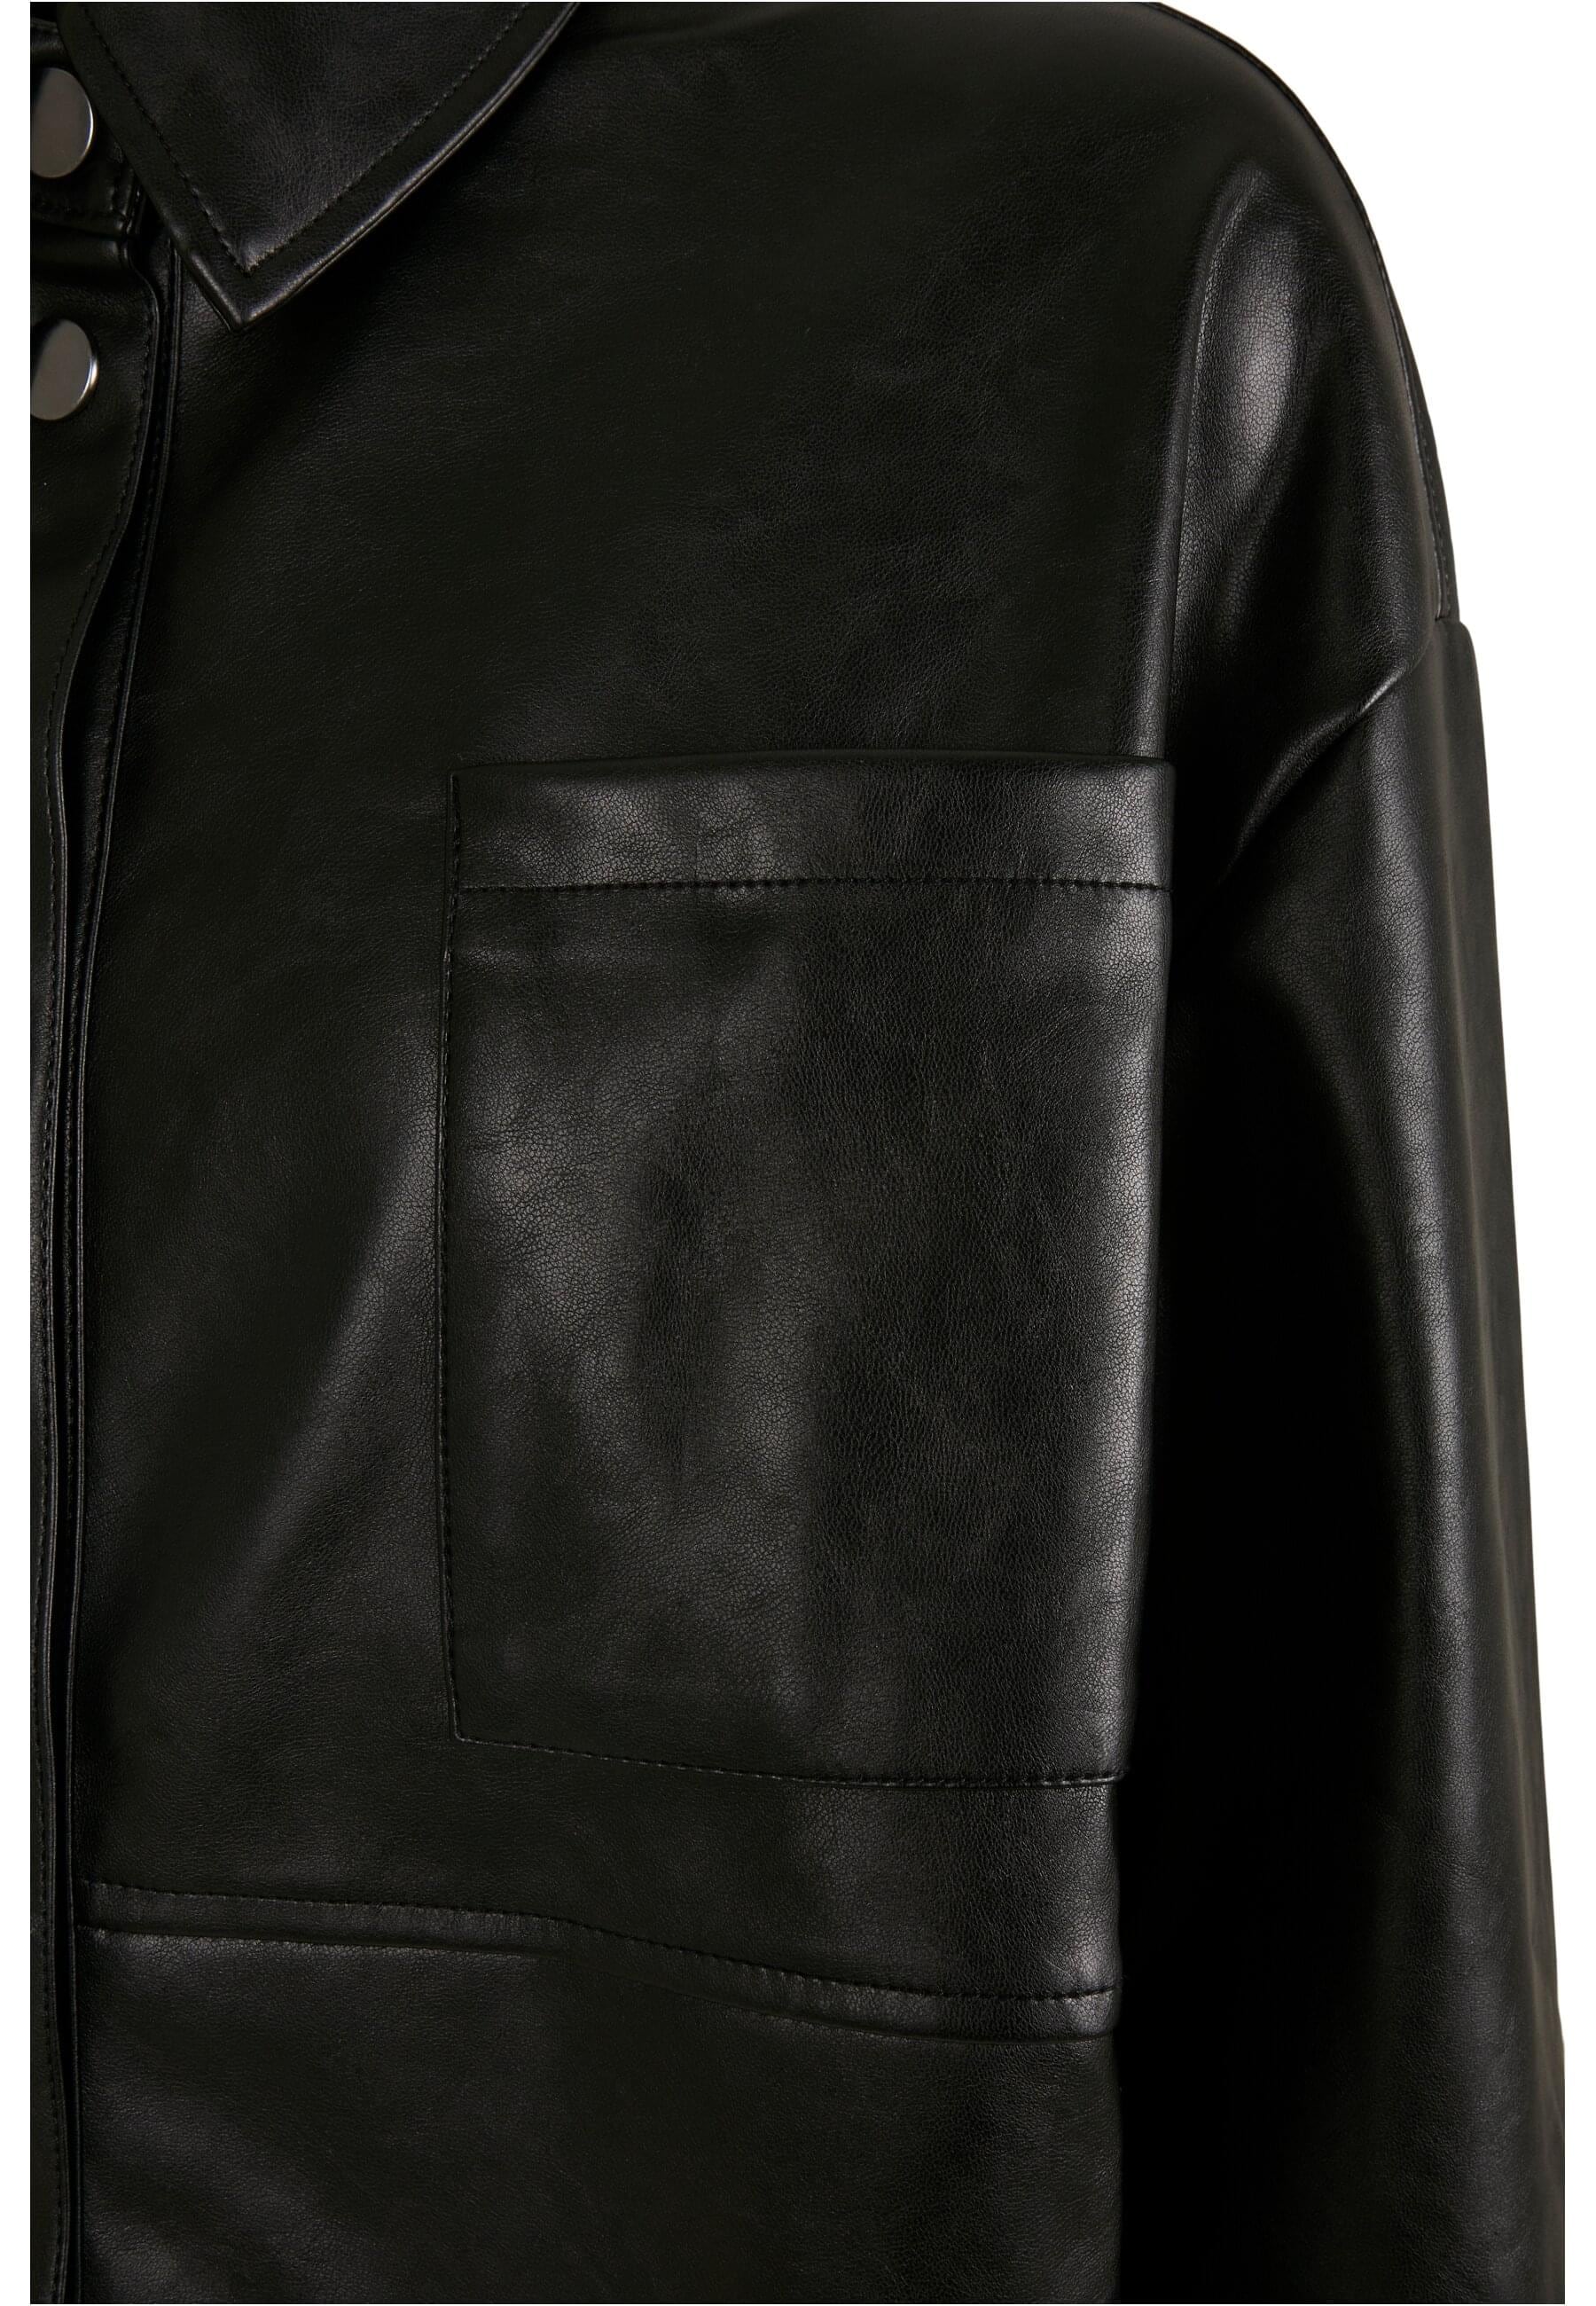 URBAN CLASSICS Hemdbluse »Urban Classics Damen Ladies Faux Leather Overshirt«